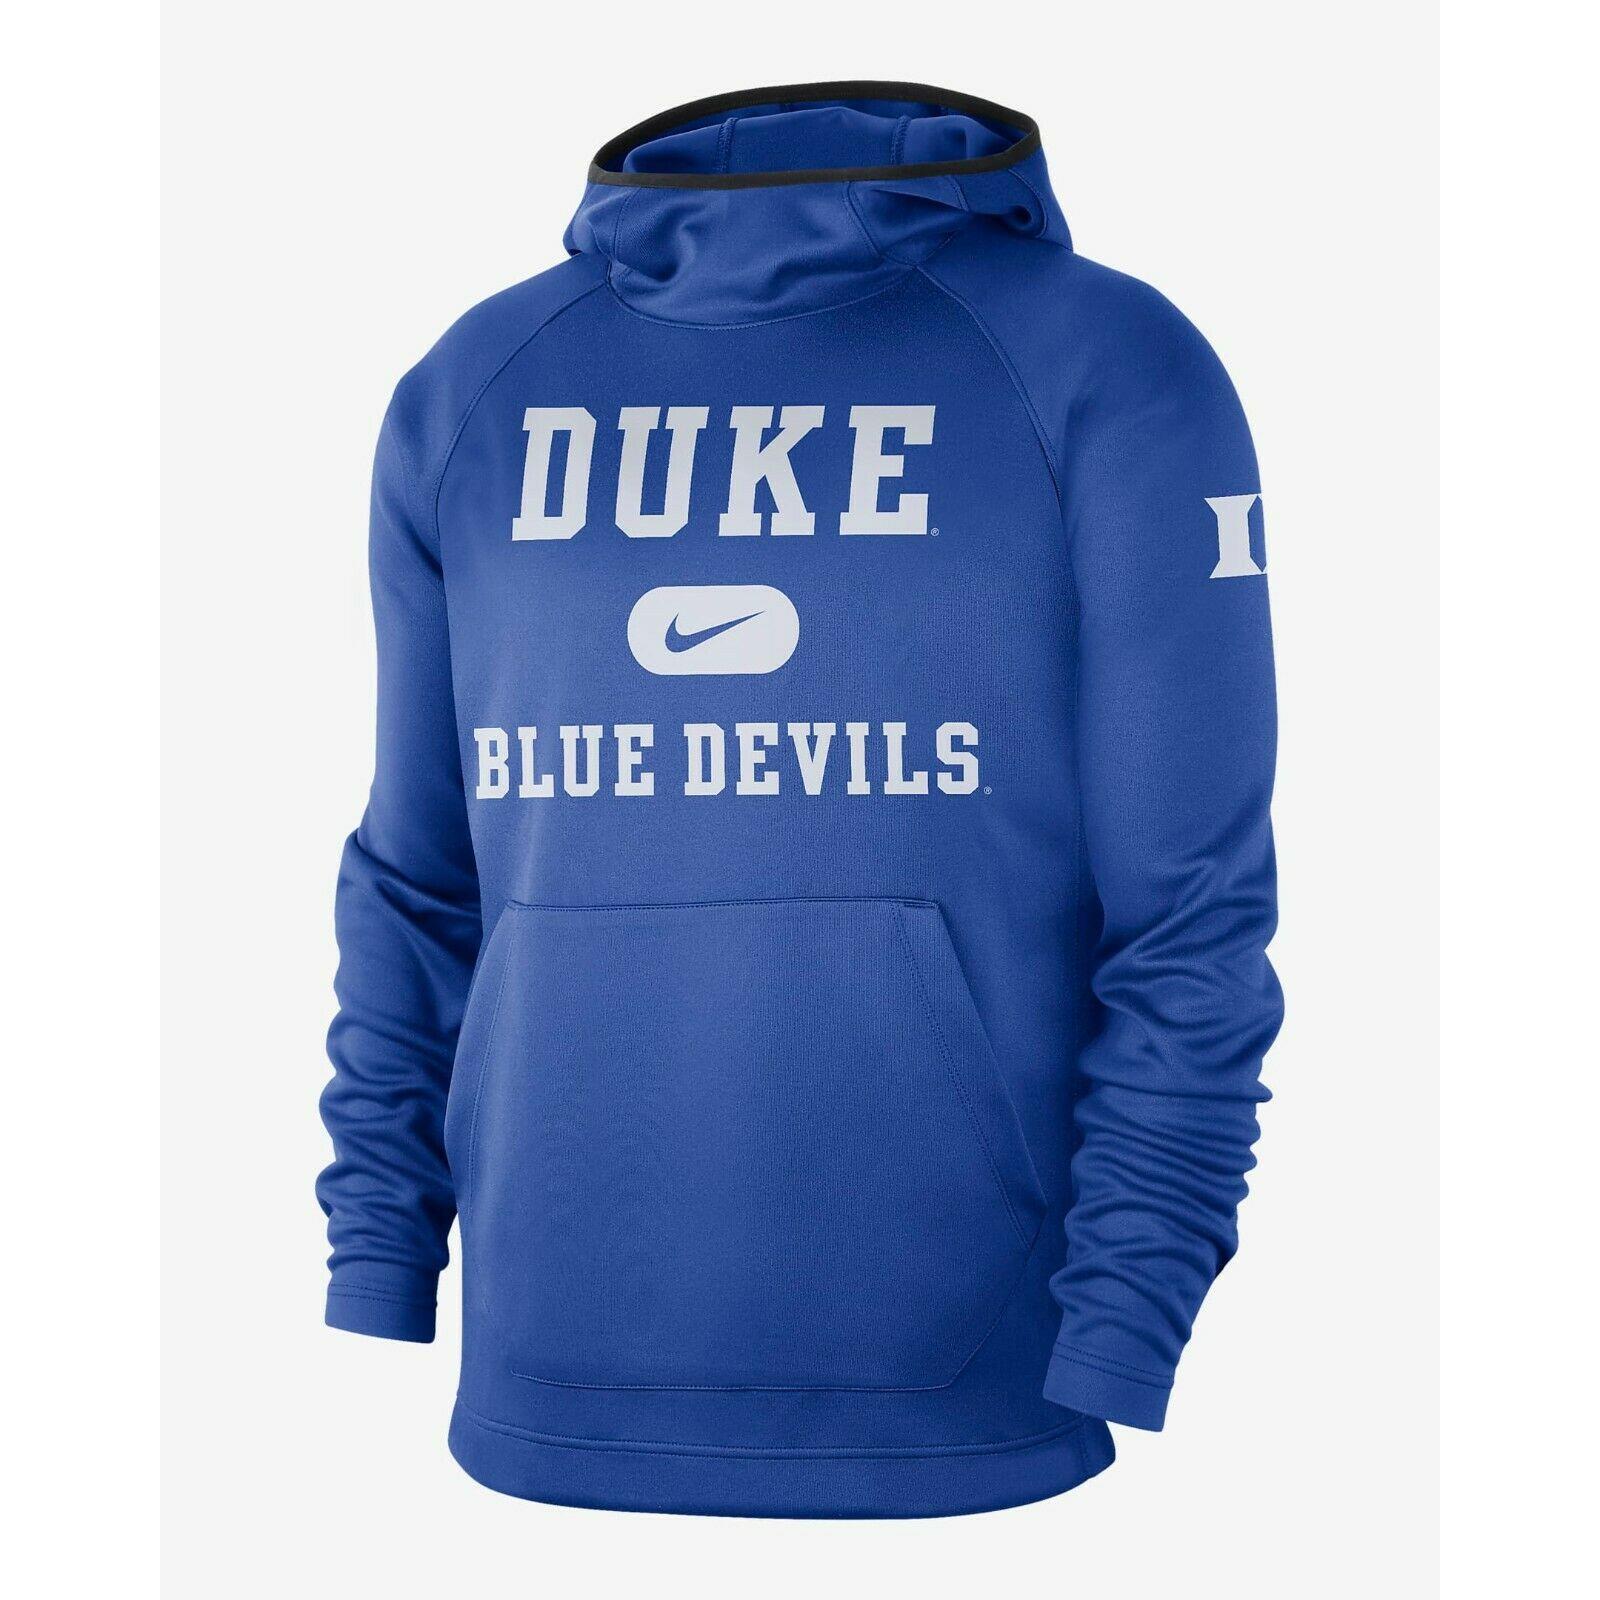 Mens Nike Dri-fit Duke Blue Devils LS Hoodie Sweatshirt S-3XL